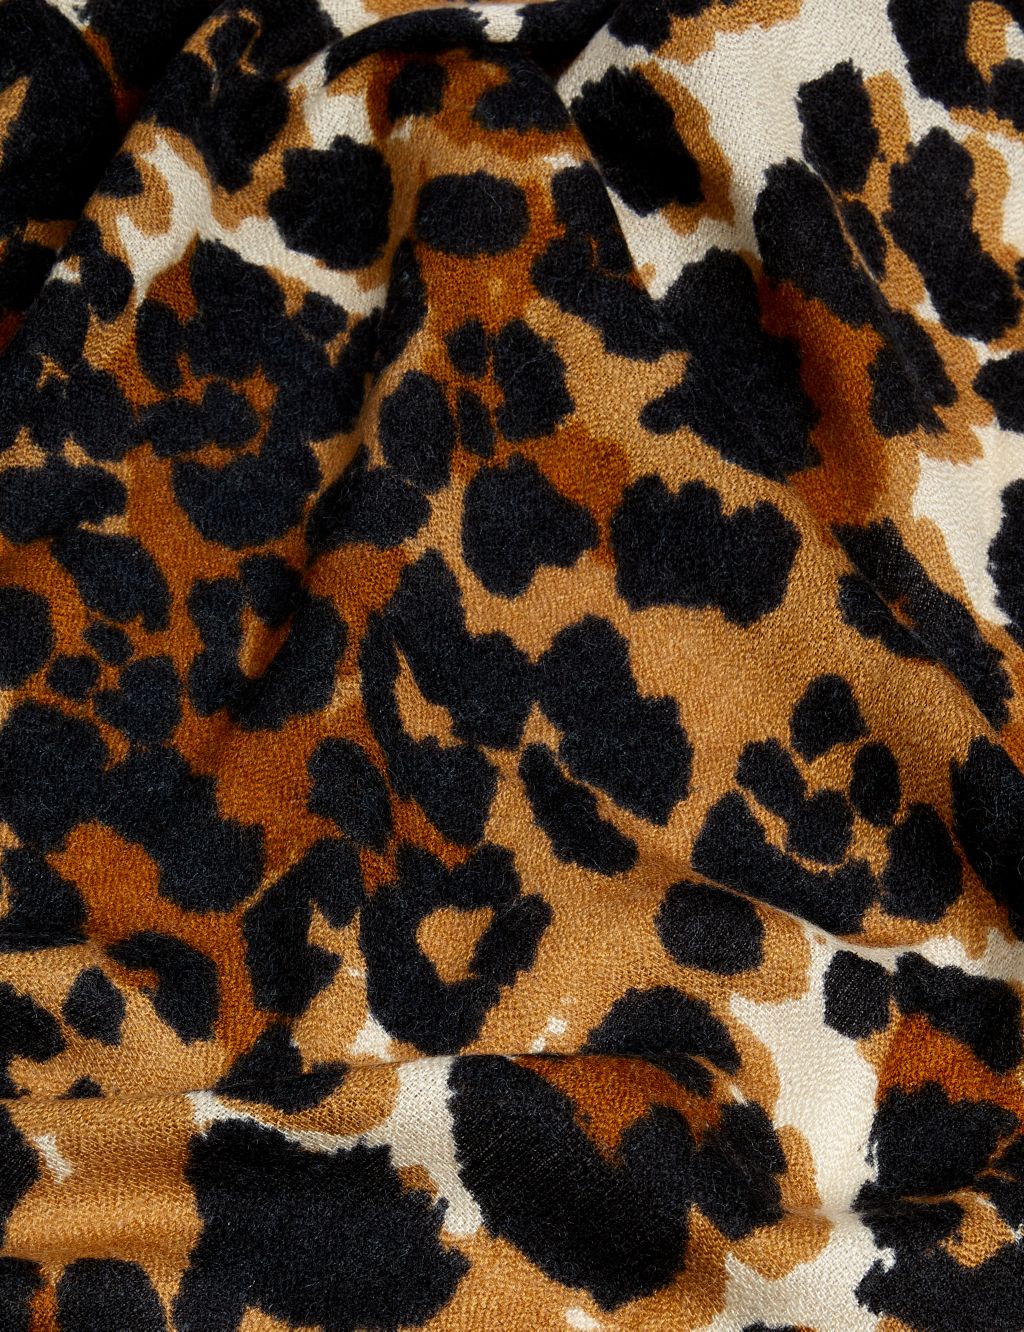 22 Leopard-Print Scarves to Shop Now